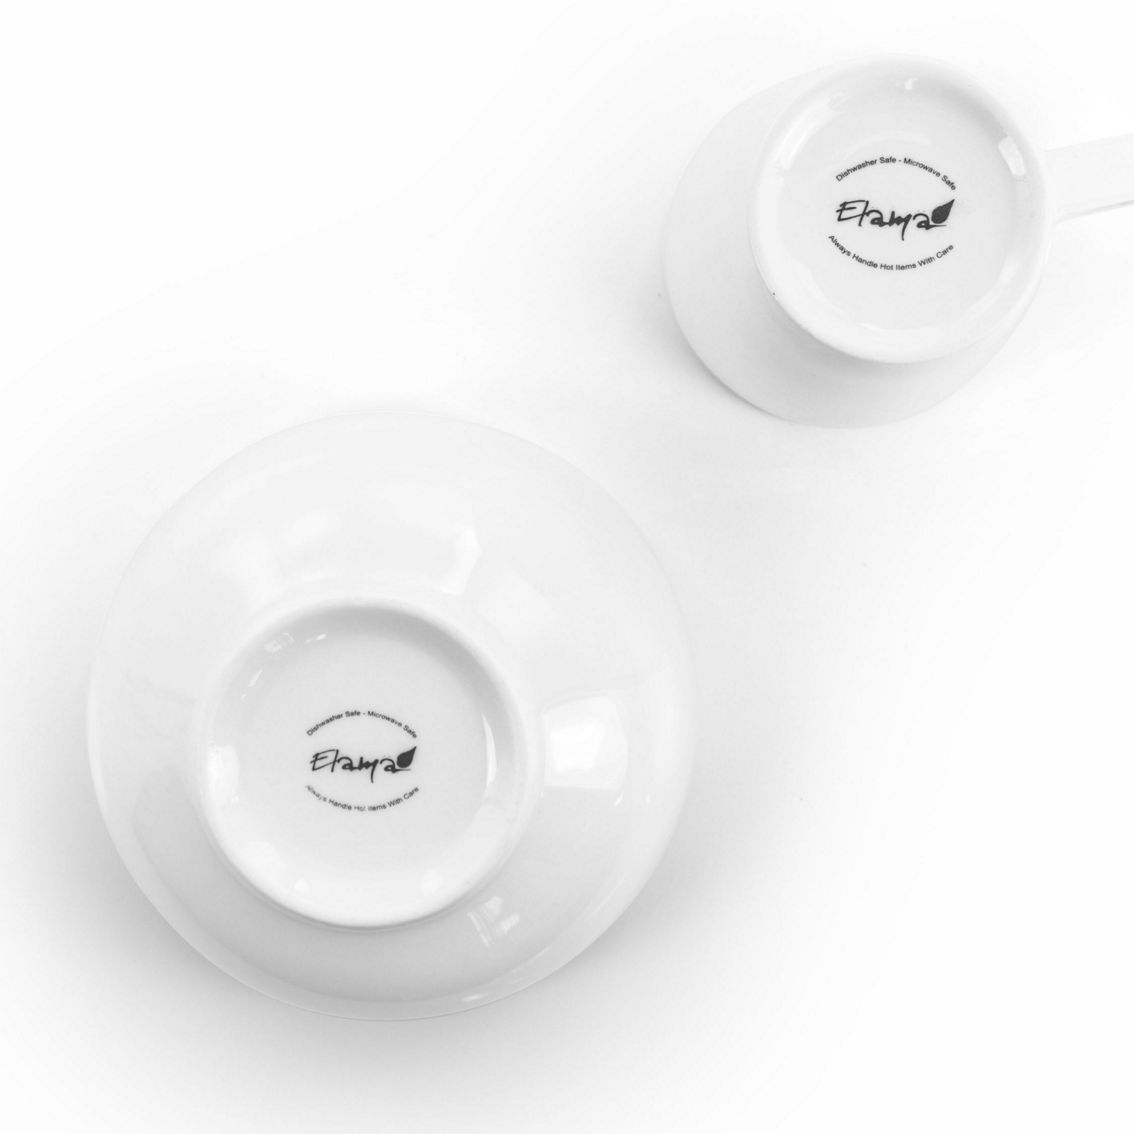 Elama Carey 18 Piece Round Porcelain Dinnerware Set in White - Image 3 of 5